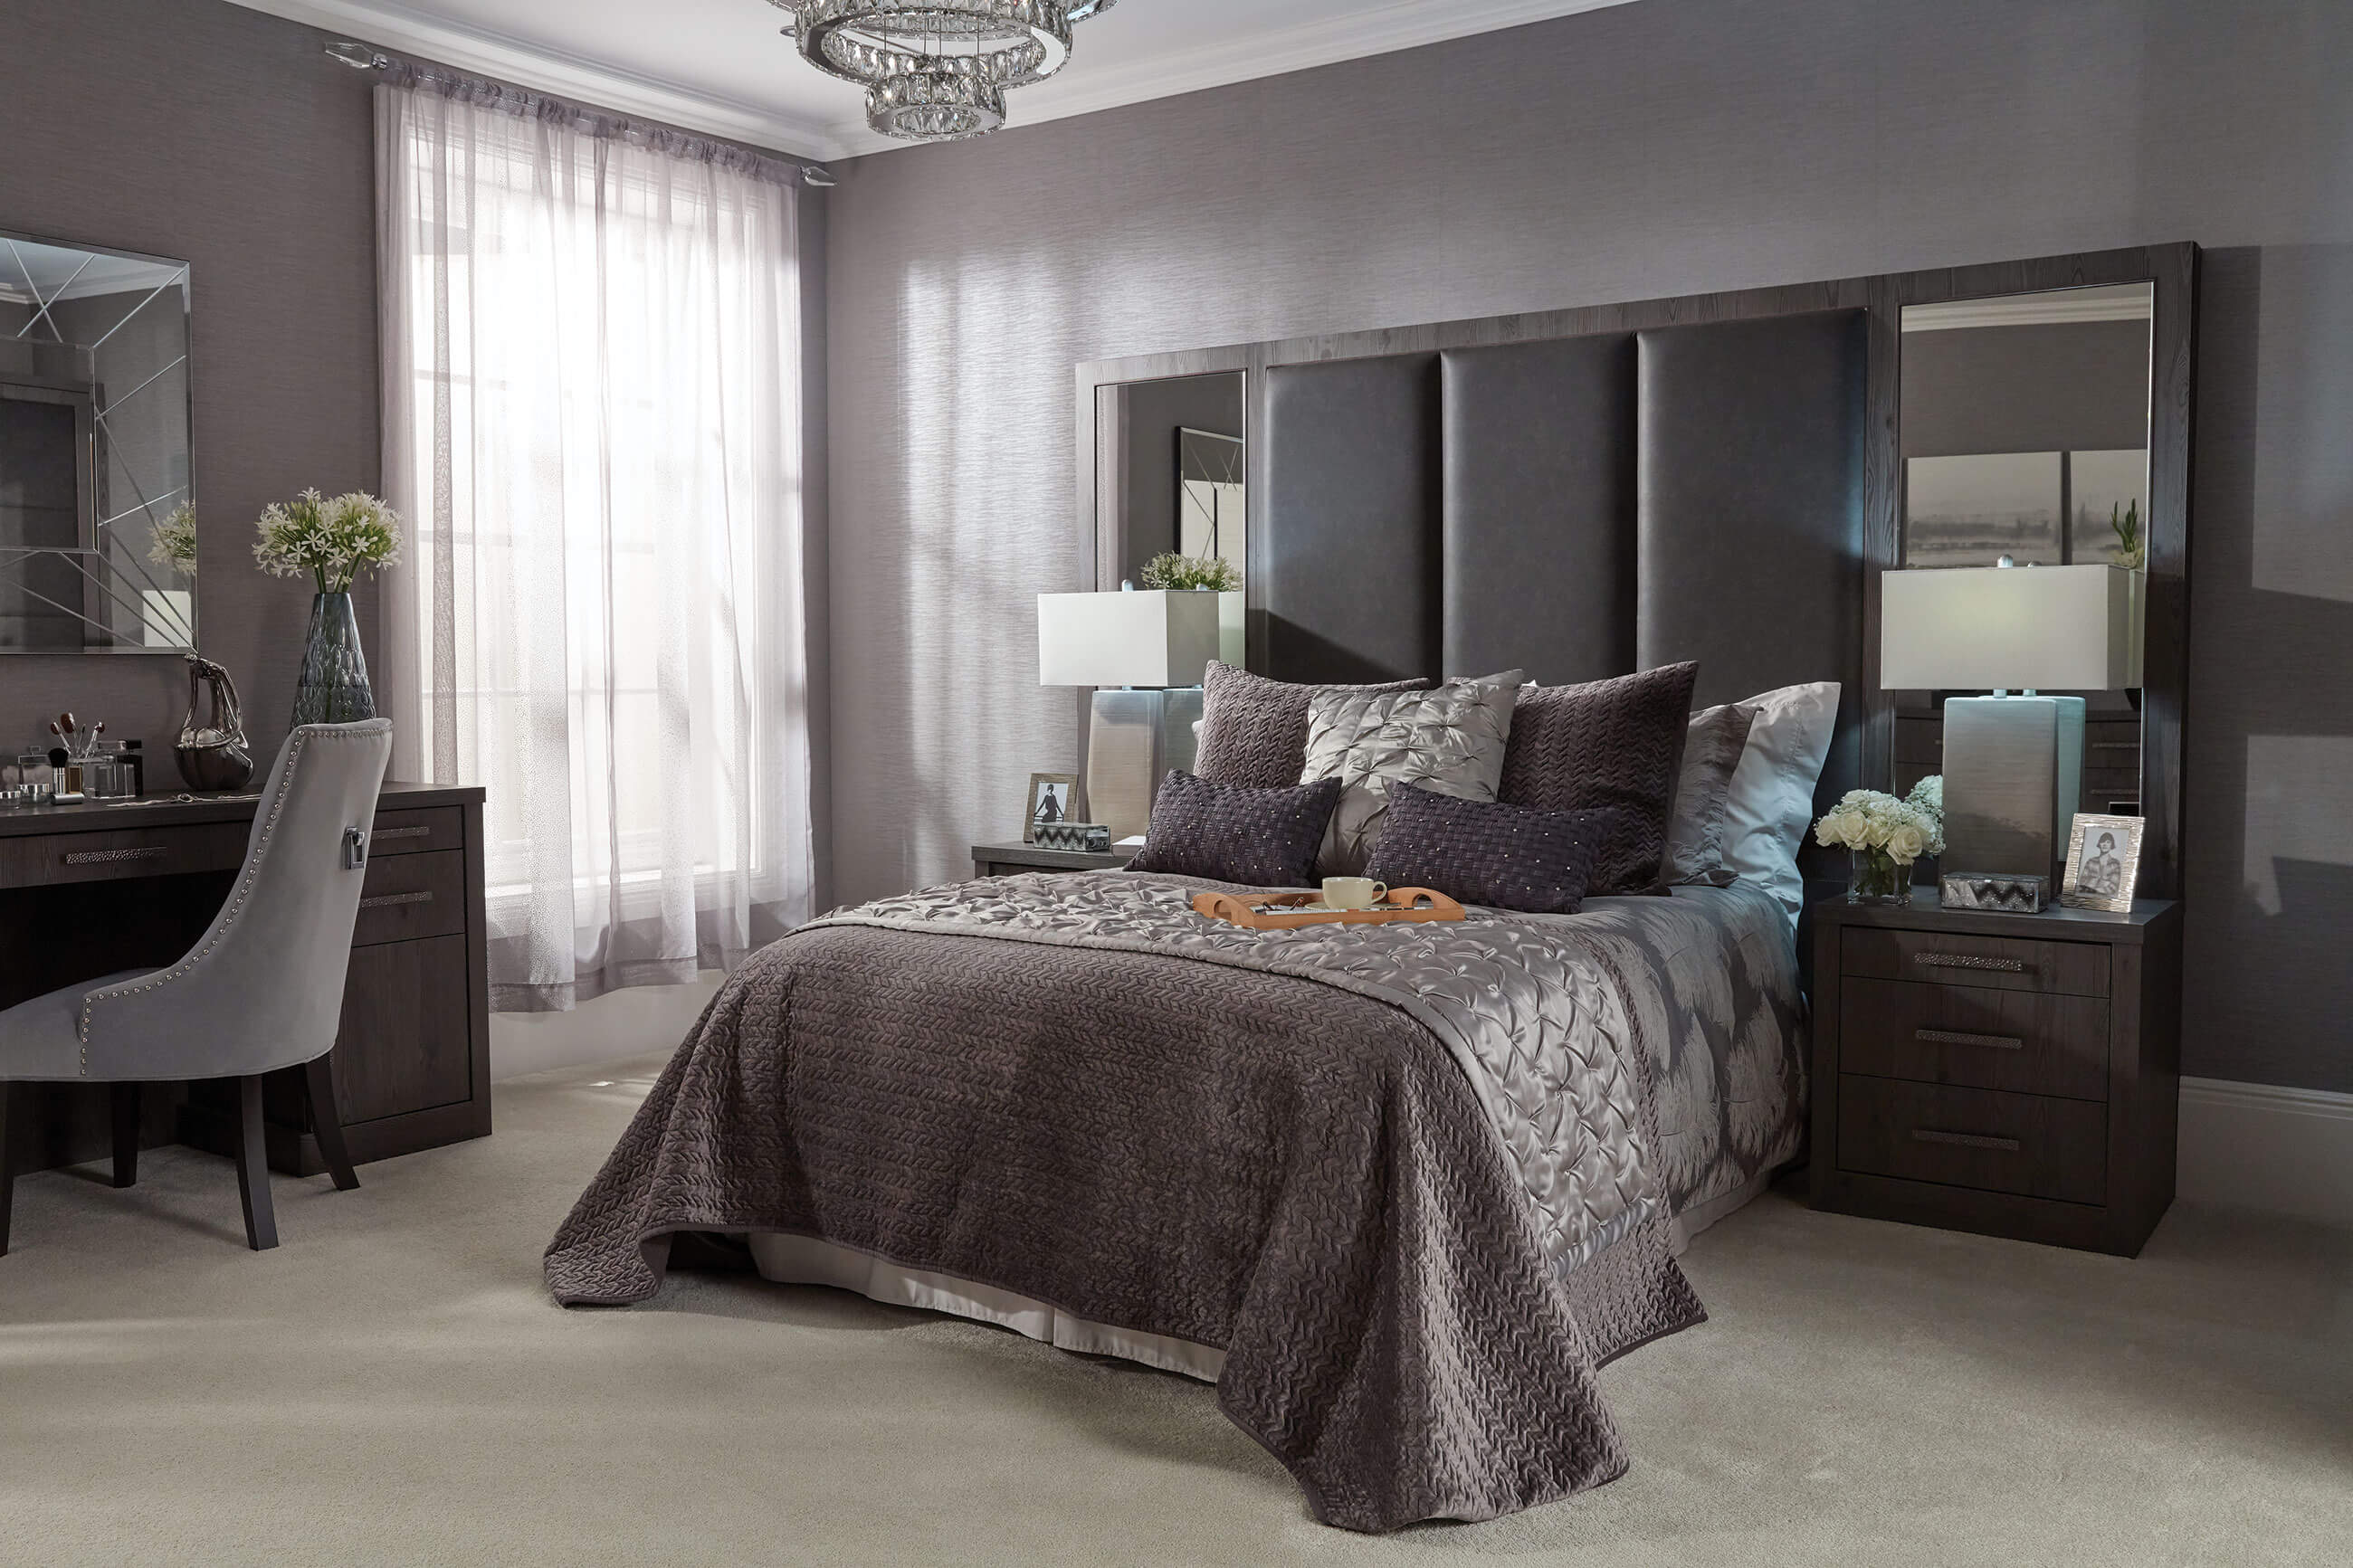 henley soft grey bedroom furniture